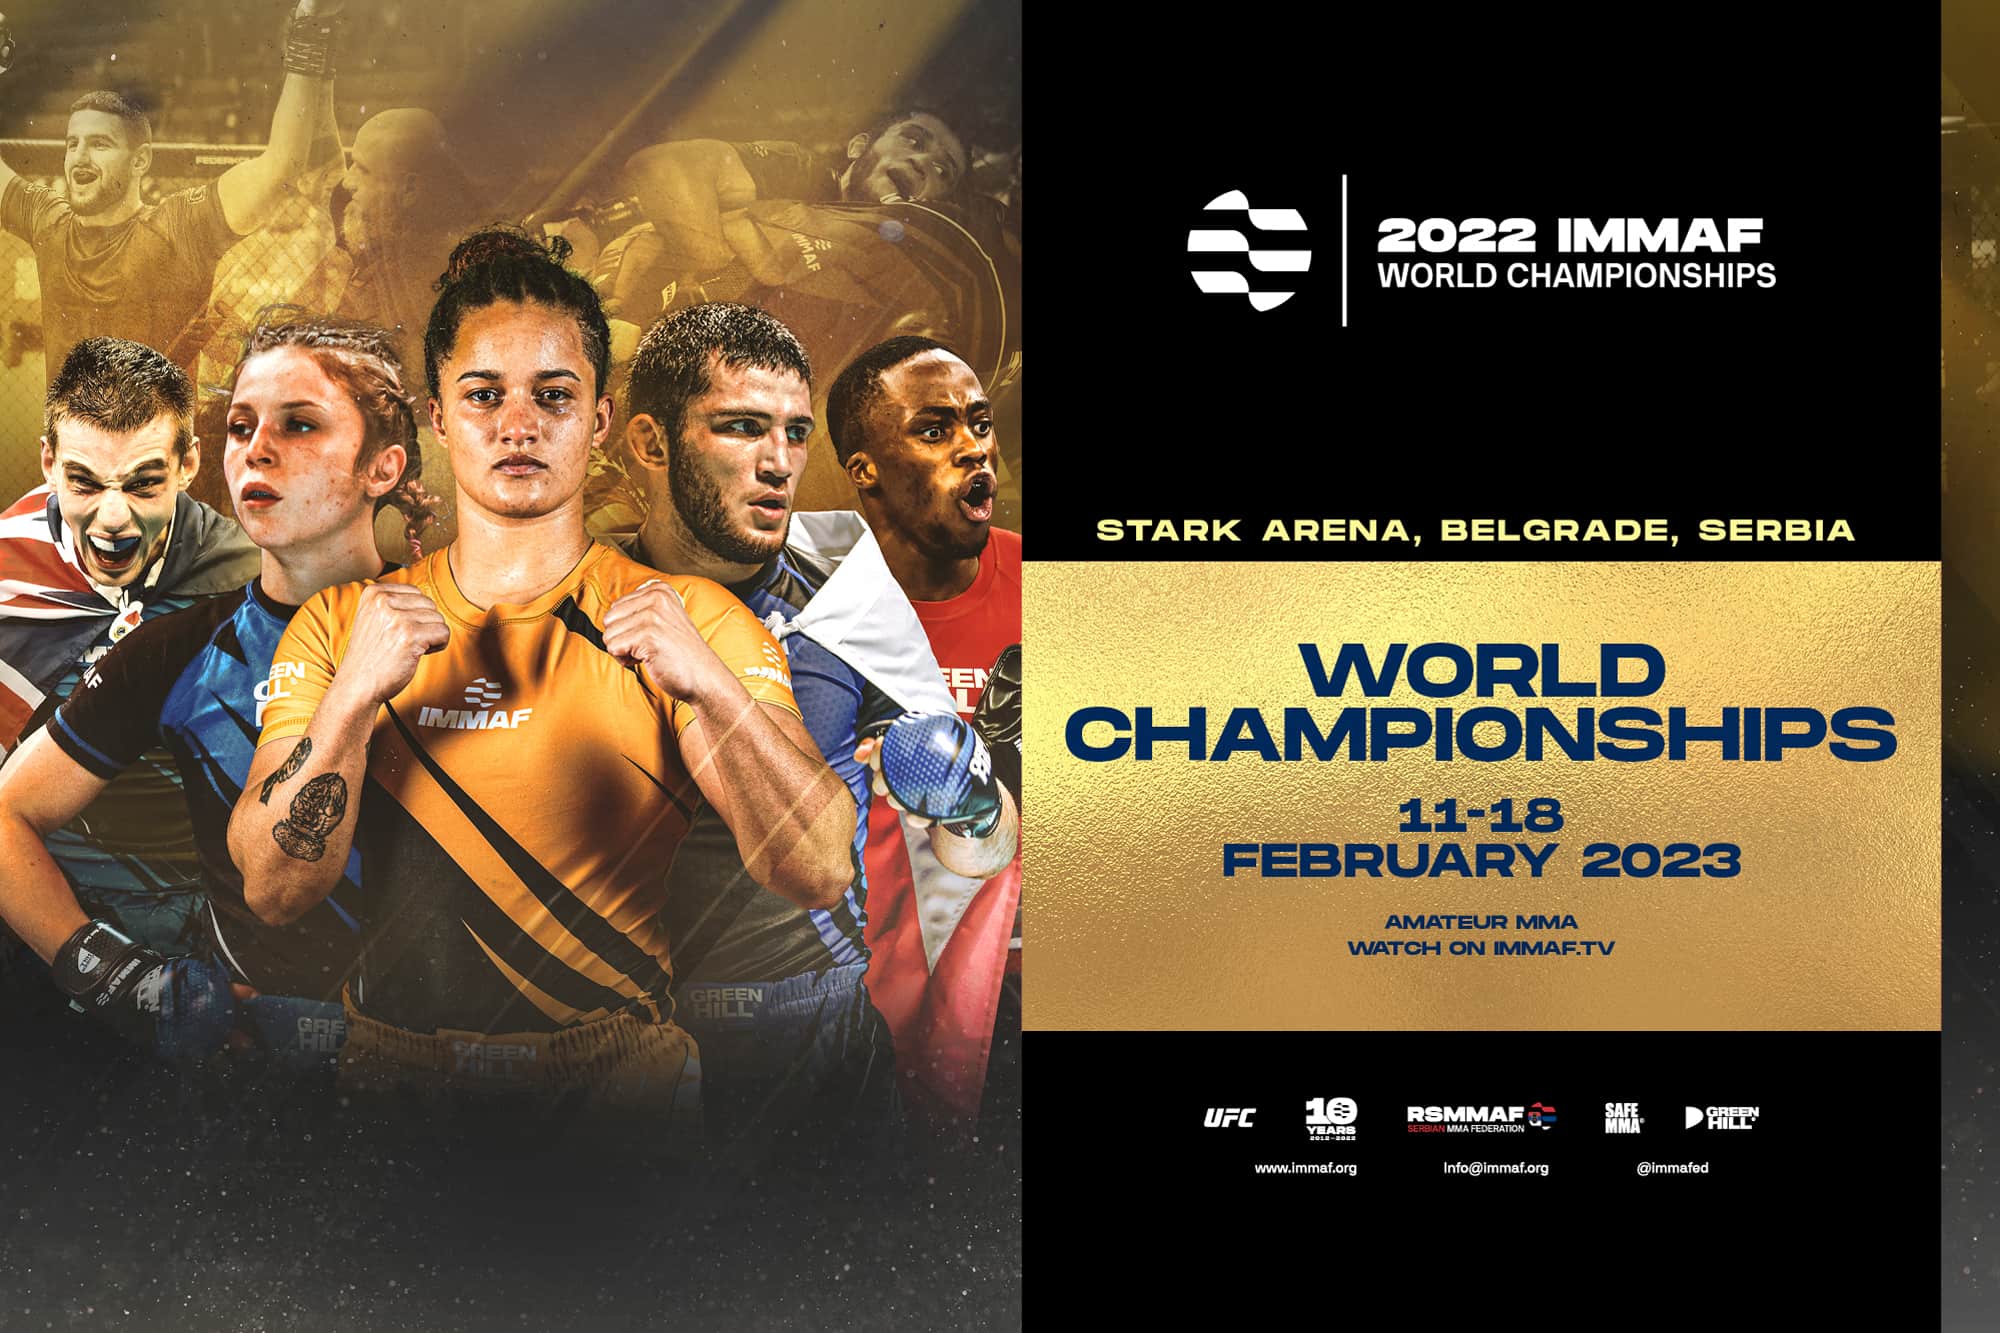 2022 IMMAF World Championships